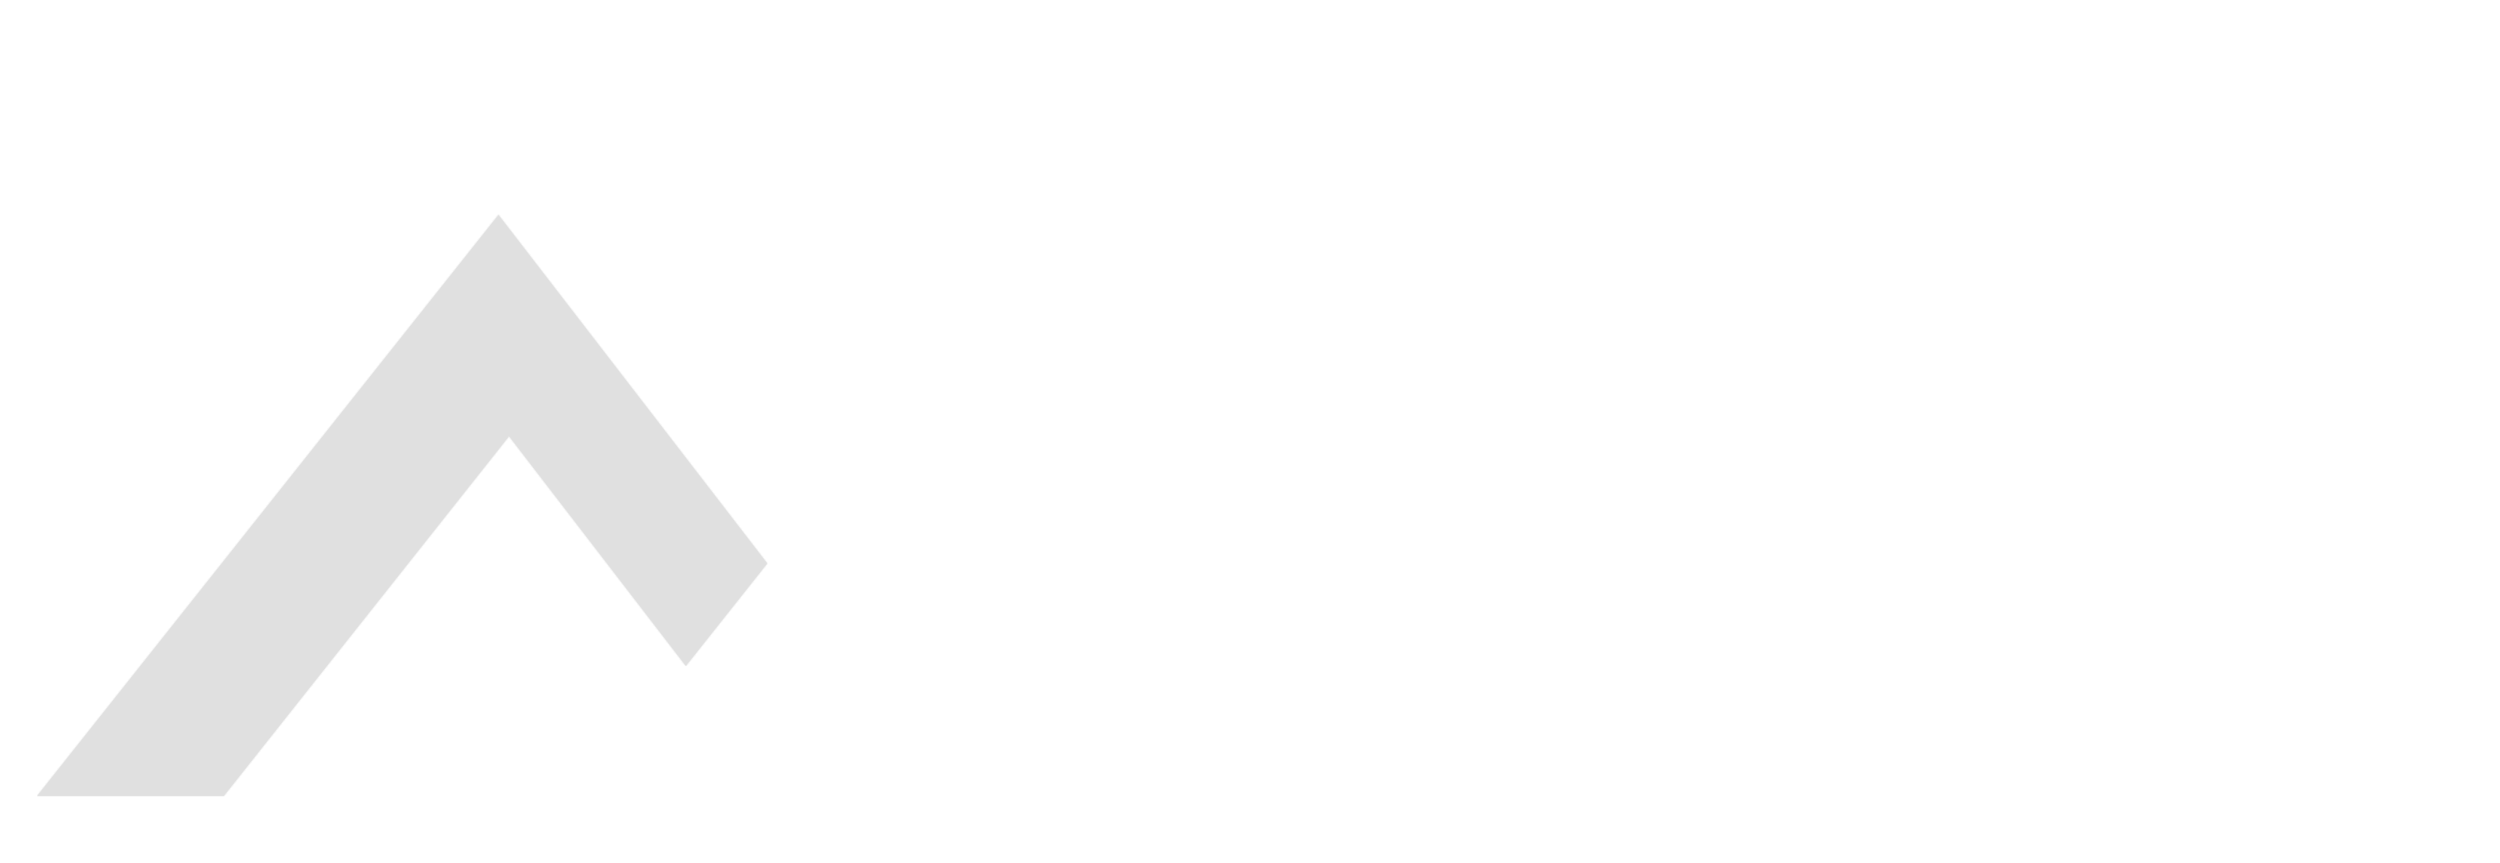 aim logo.png